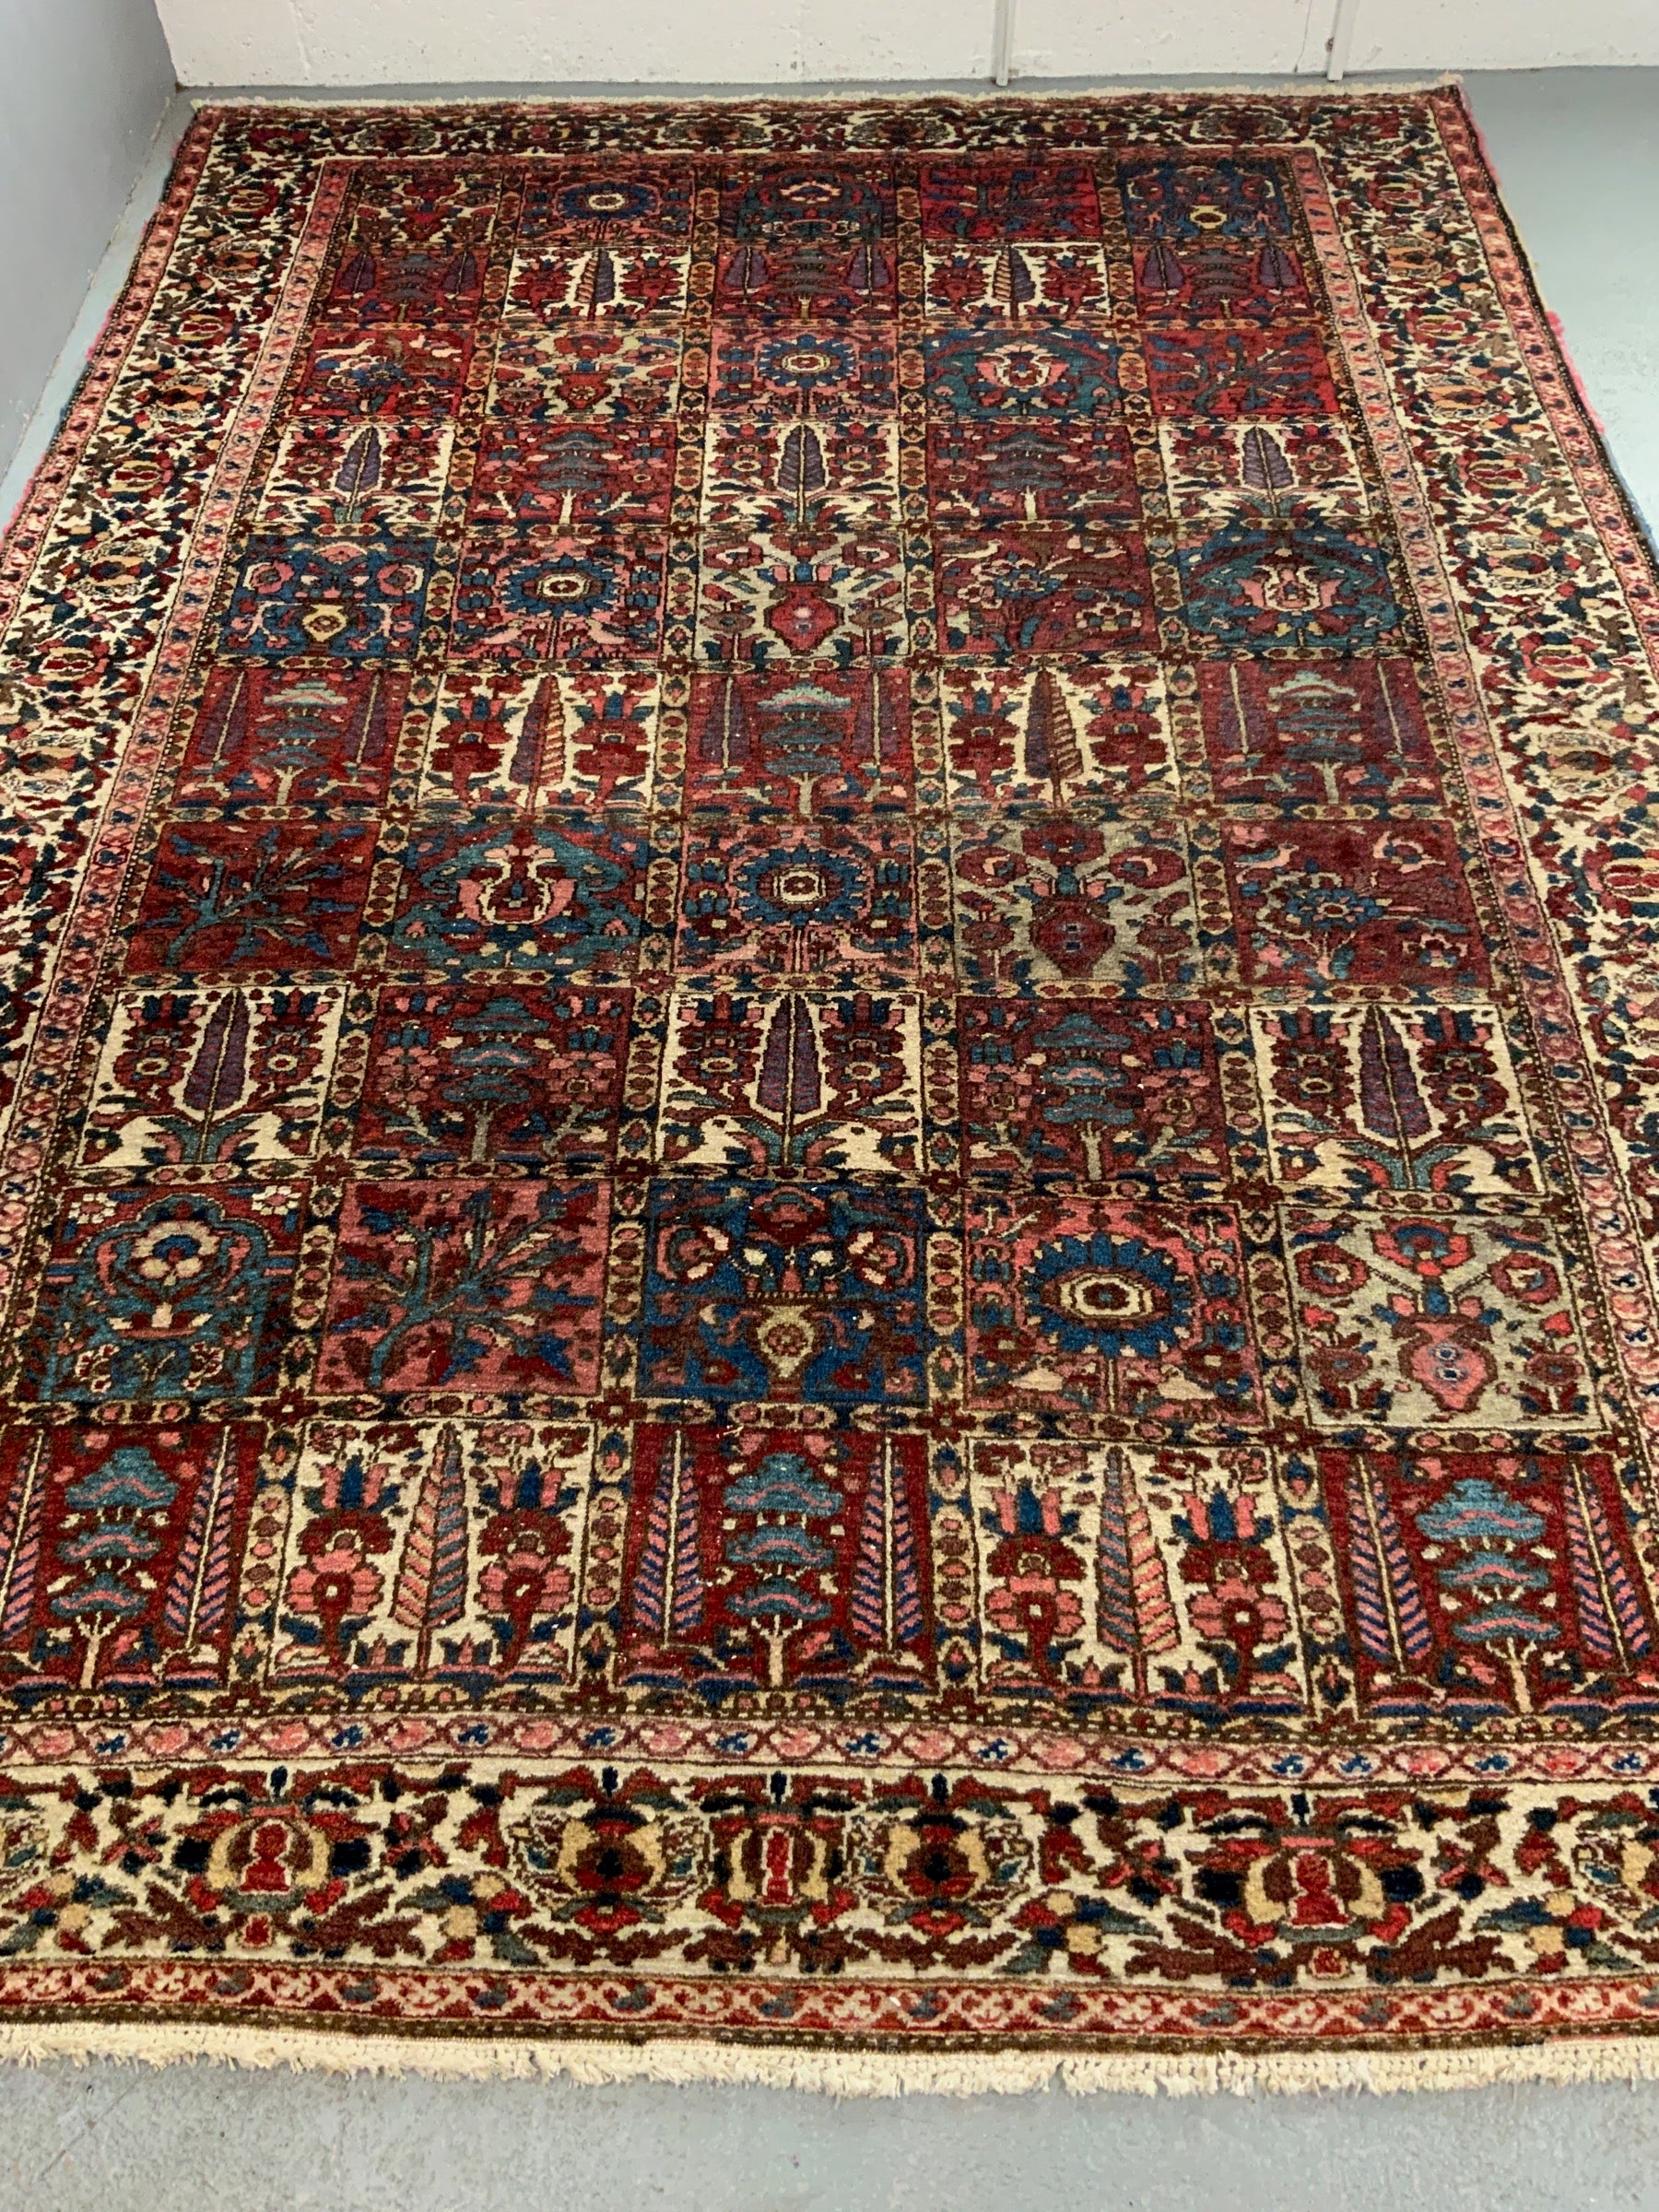 Bactiar carpet (310 x 226cm)